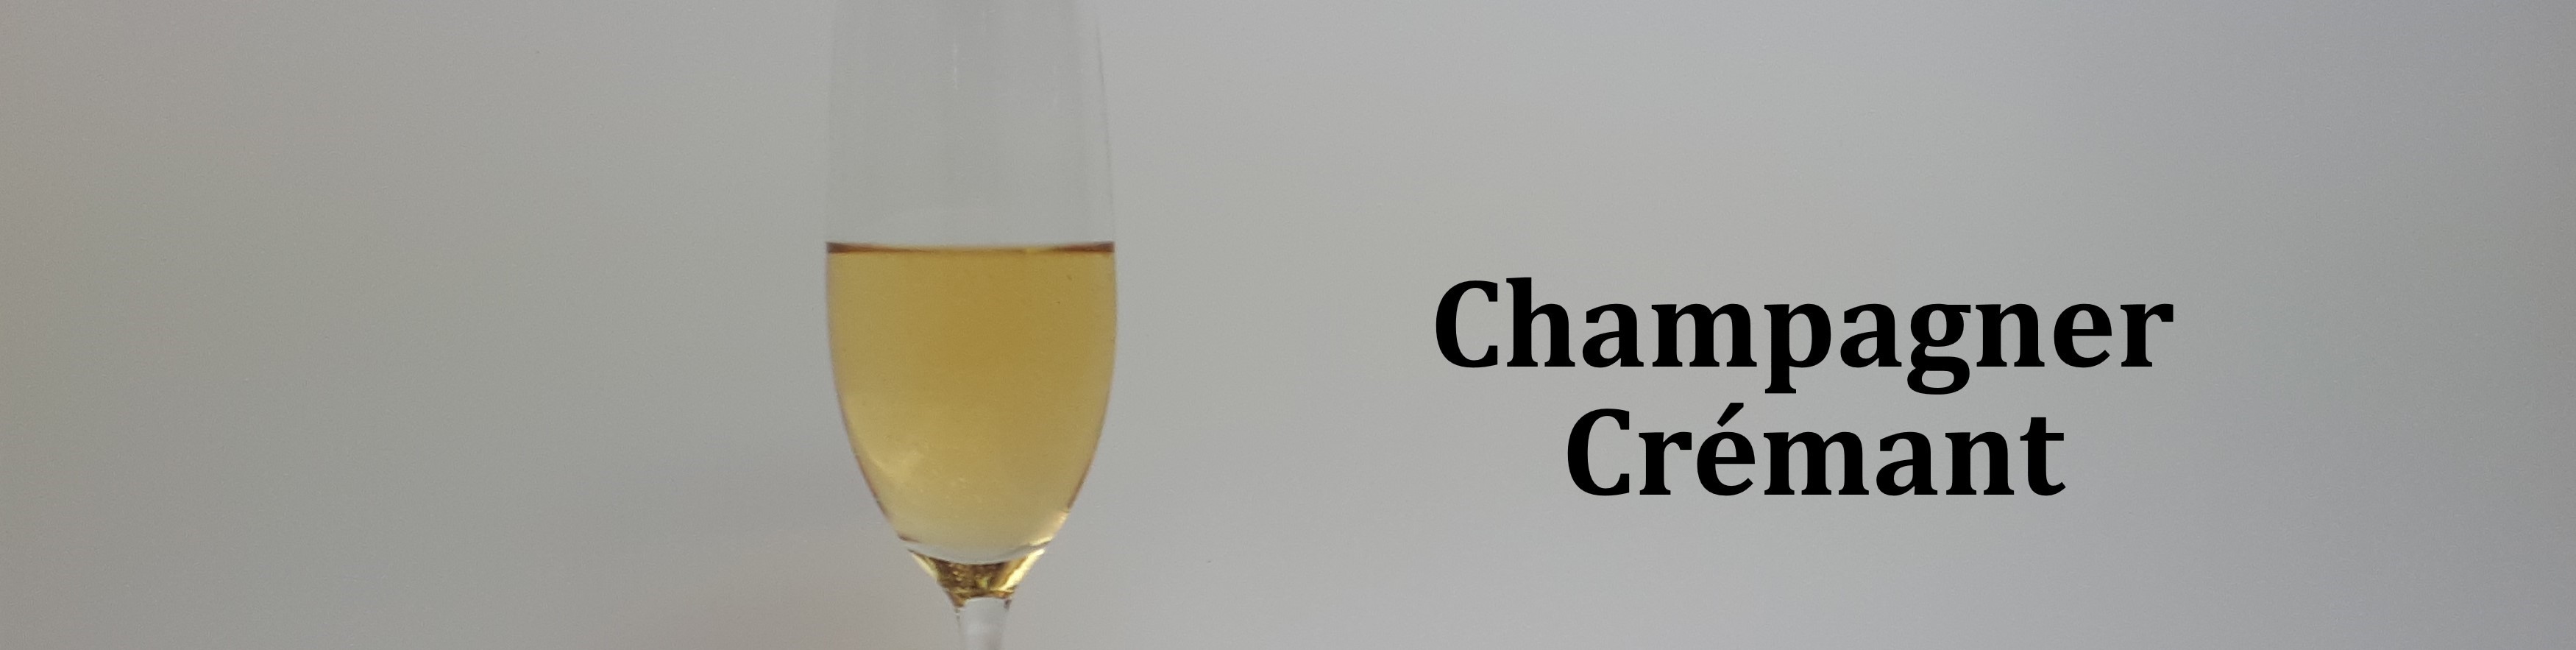 Champagner_Cremant